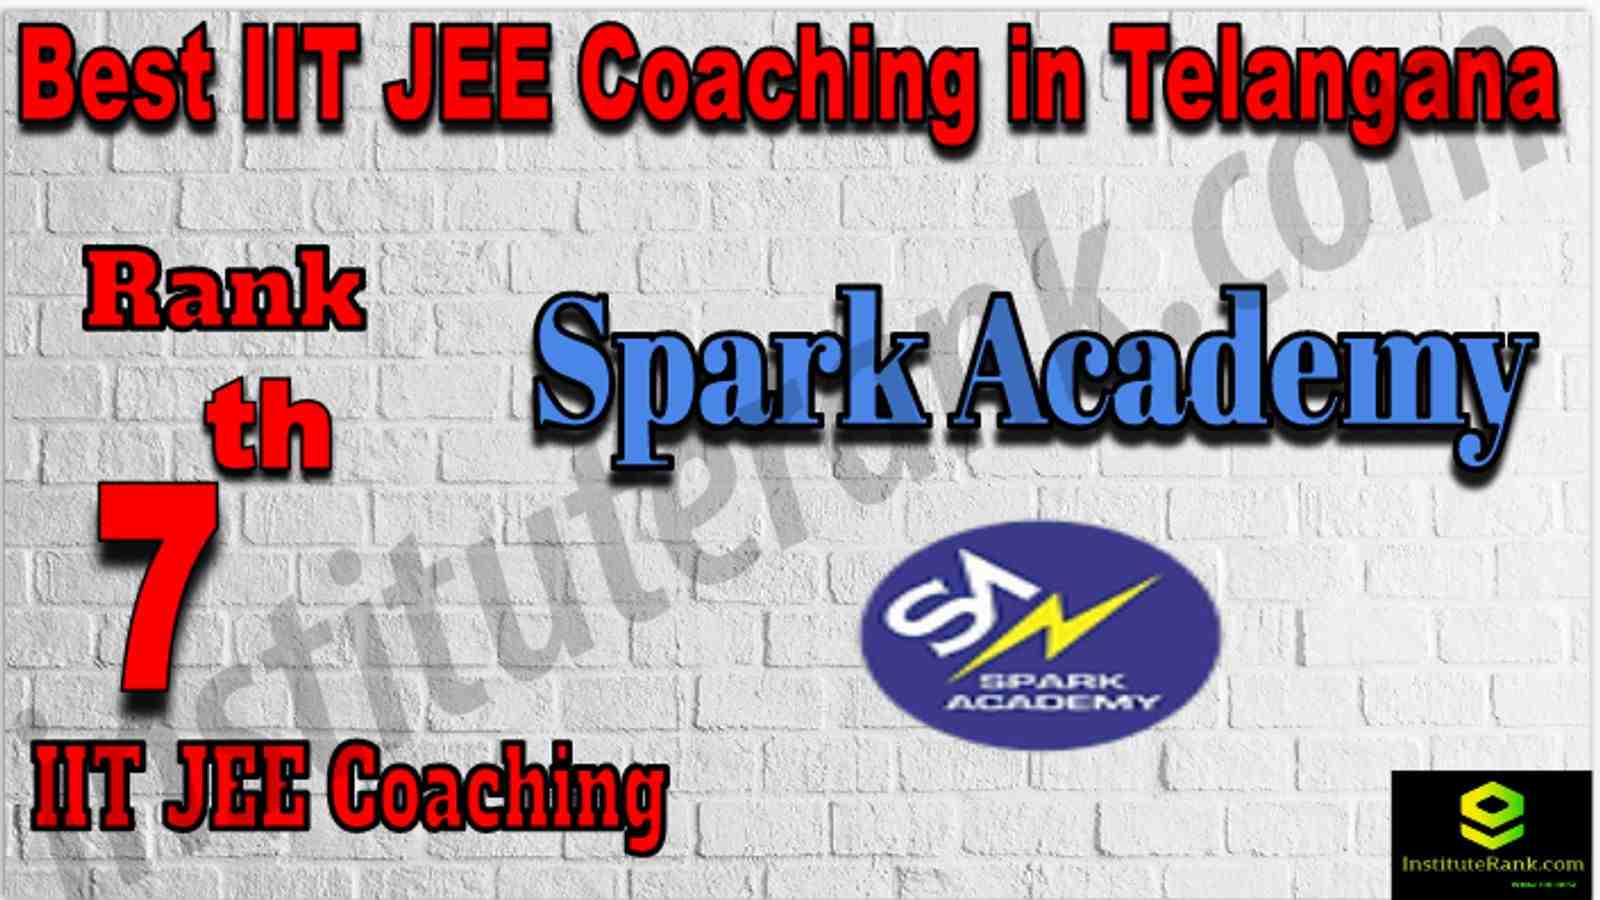 Rank 7th Best IIT JEE Coaching in Telangana